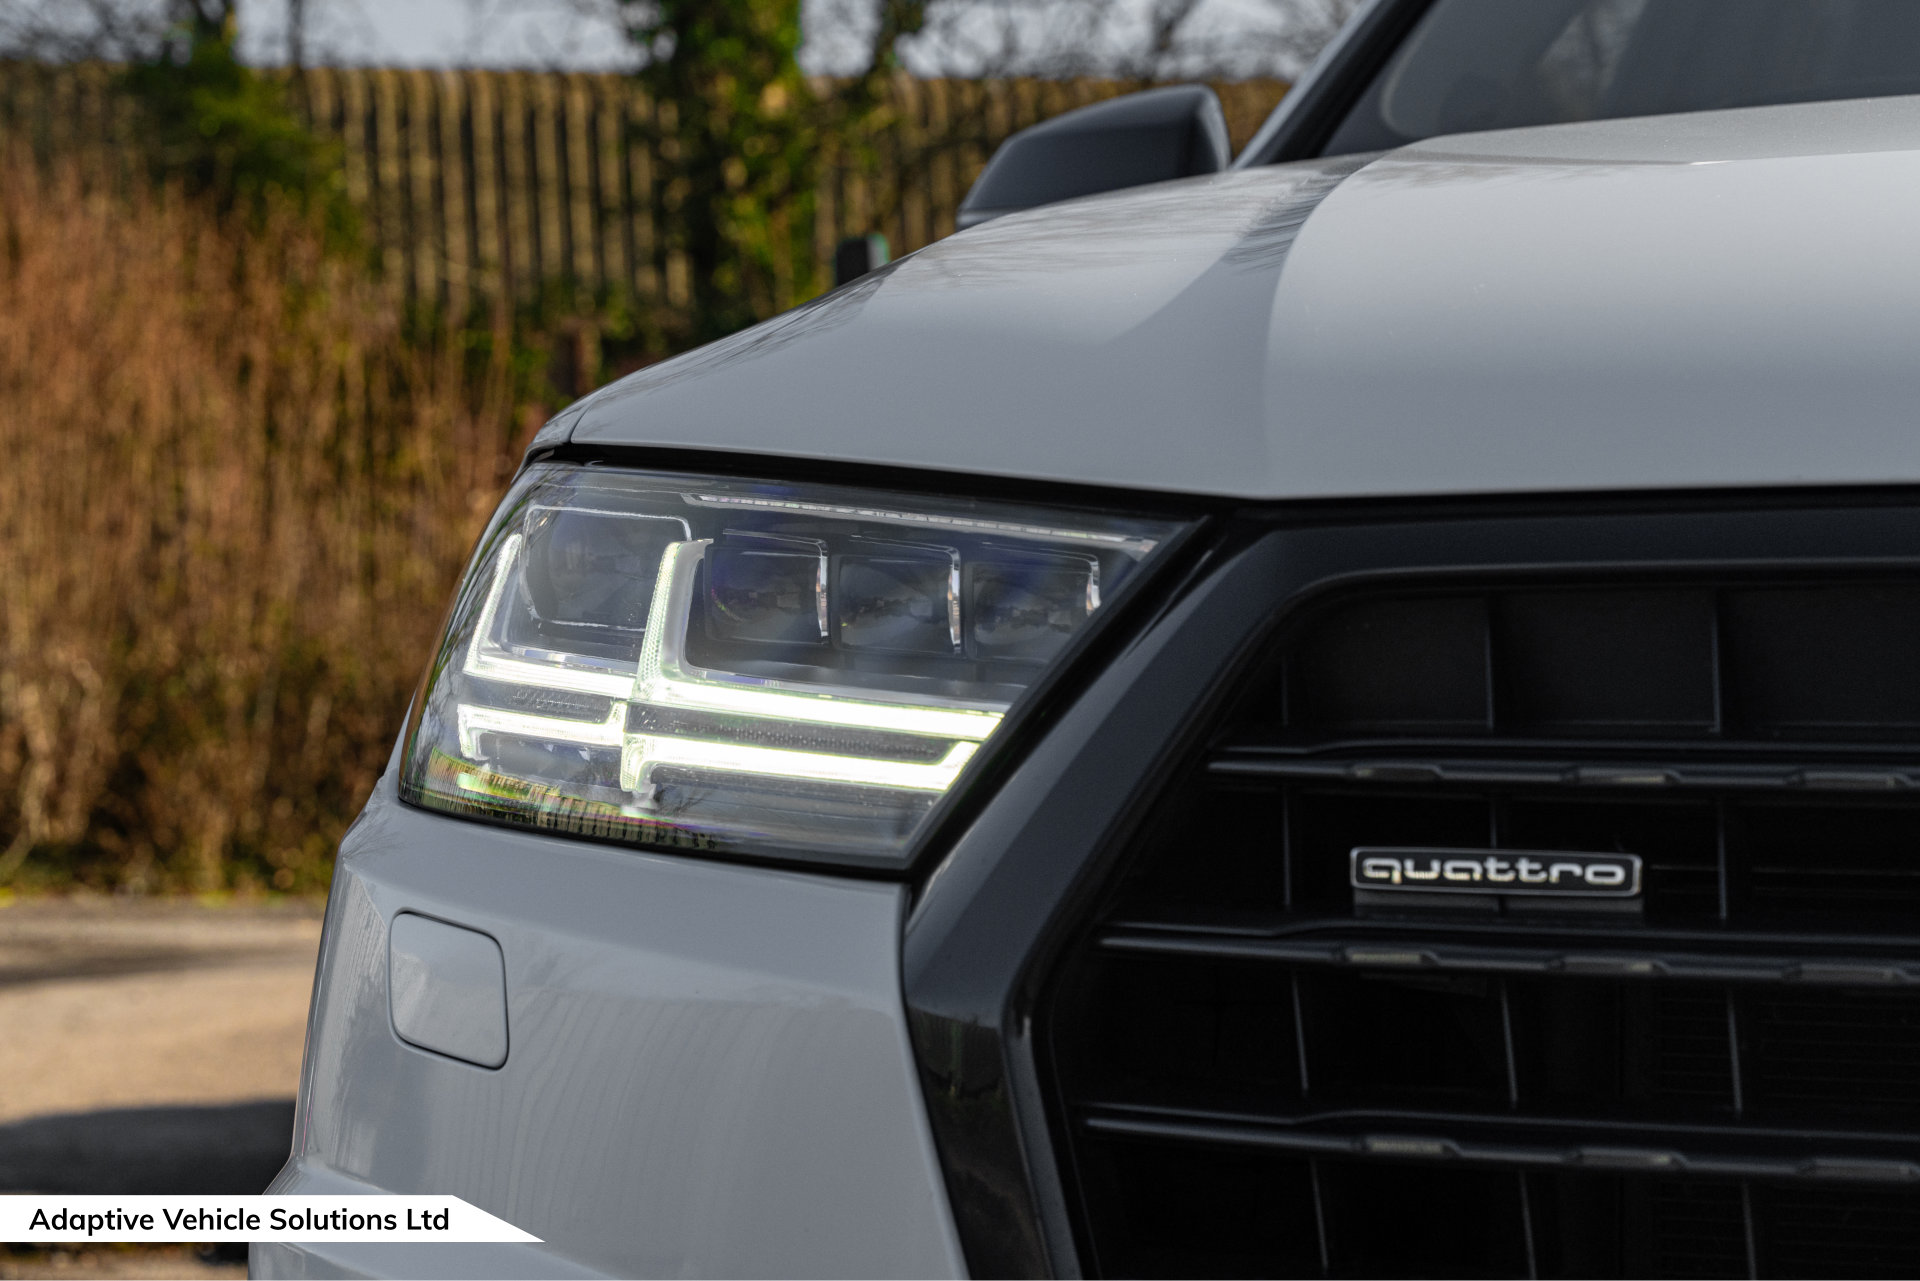 2019 Audi Q7 Vorsprung White LED day time running lights